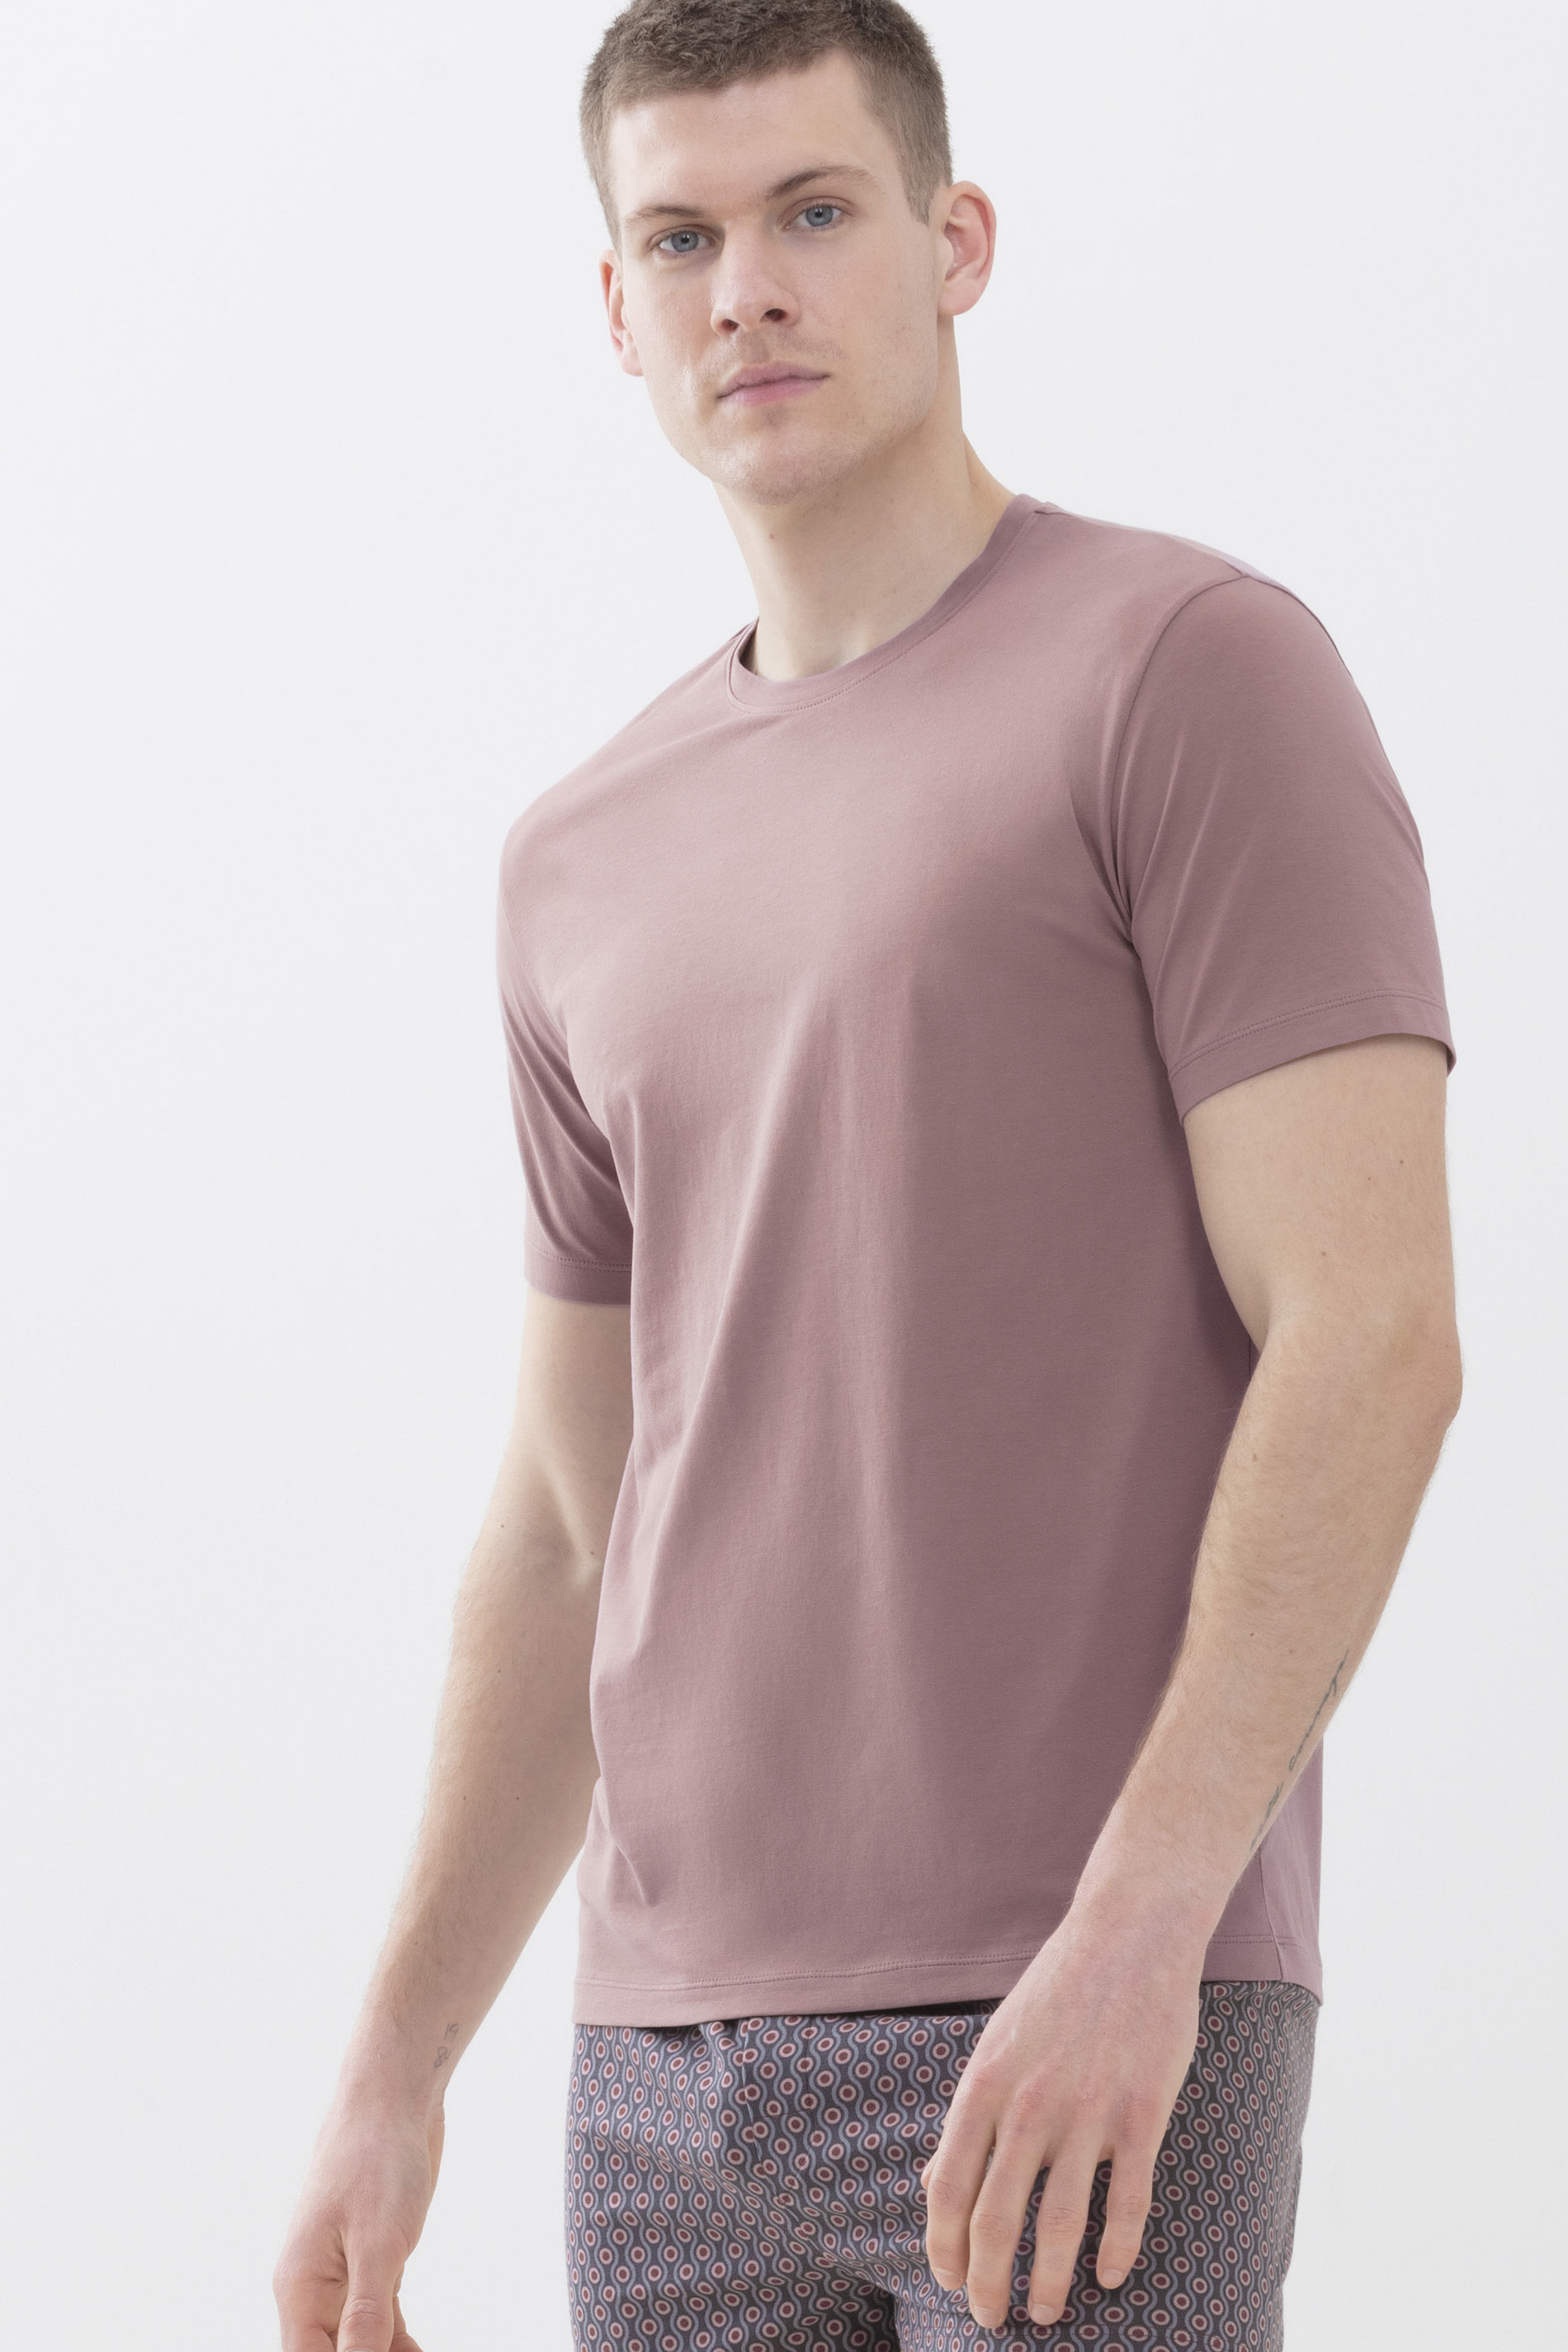 T-Shirt Blush Powder Serie Relax Frontansicht | mey®